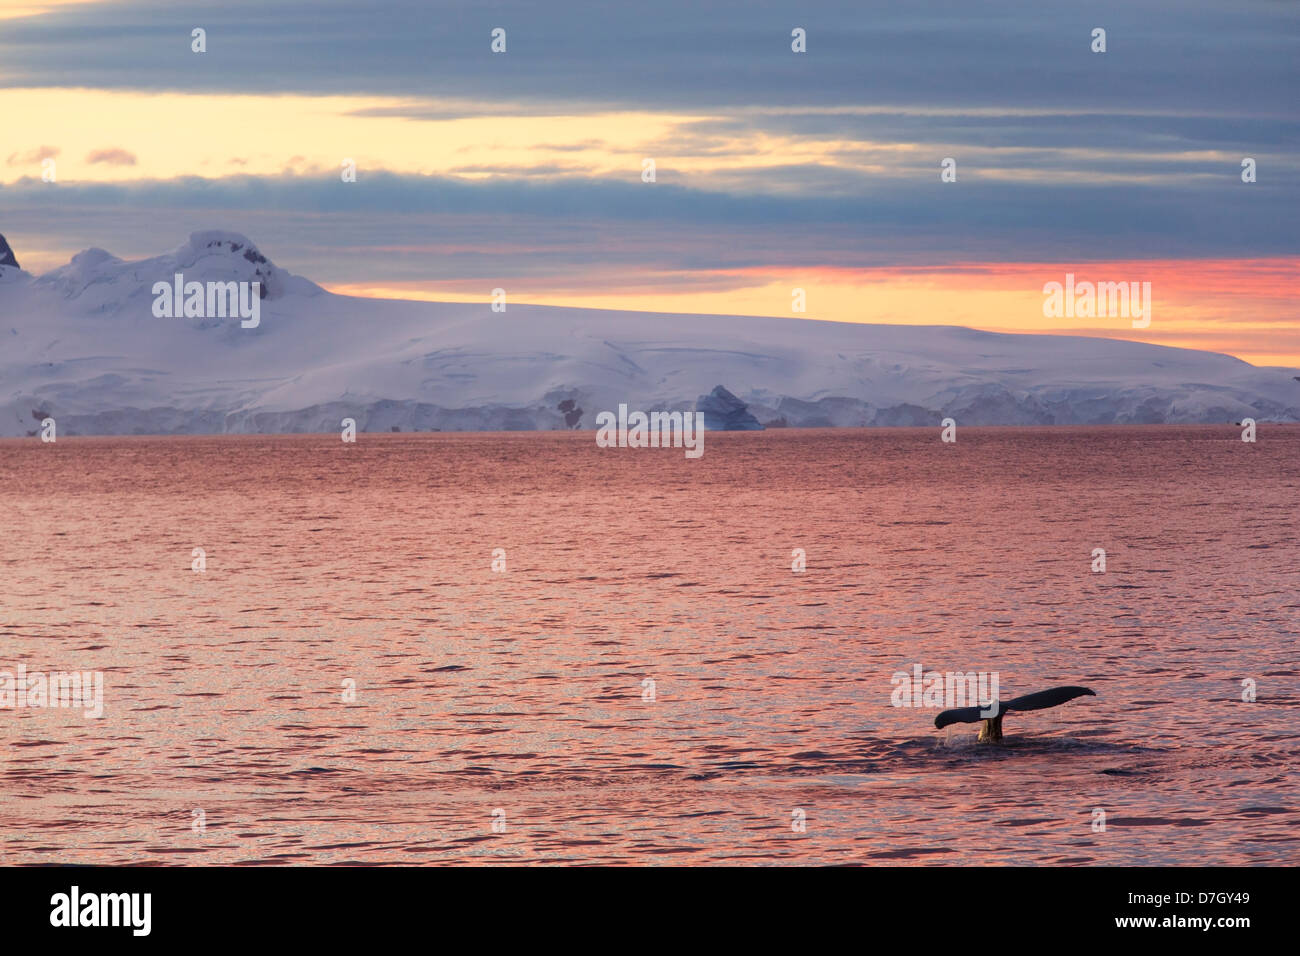 Humpback whale (Megaptera novaeangliae) at sunset / sunrise as we travel below the Antarctic Circle, Antarctica.  Stock Photo